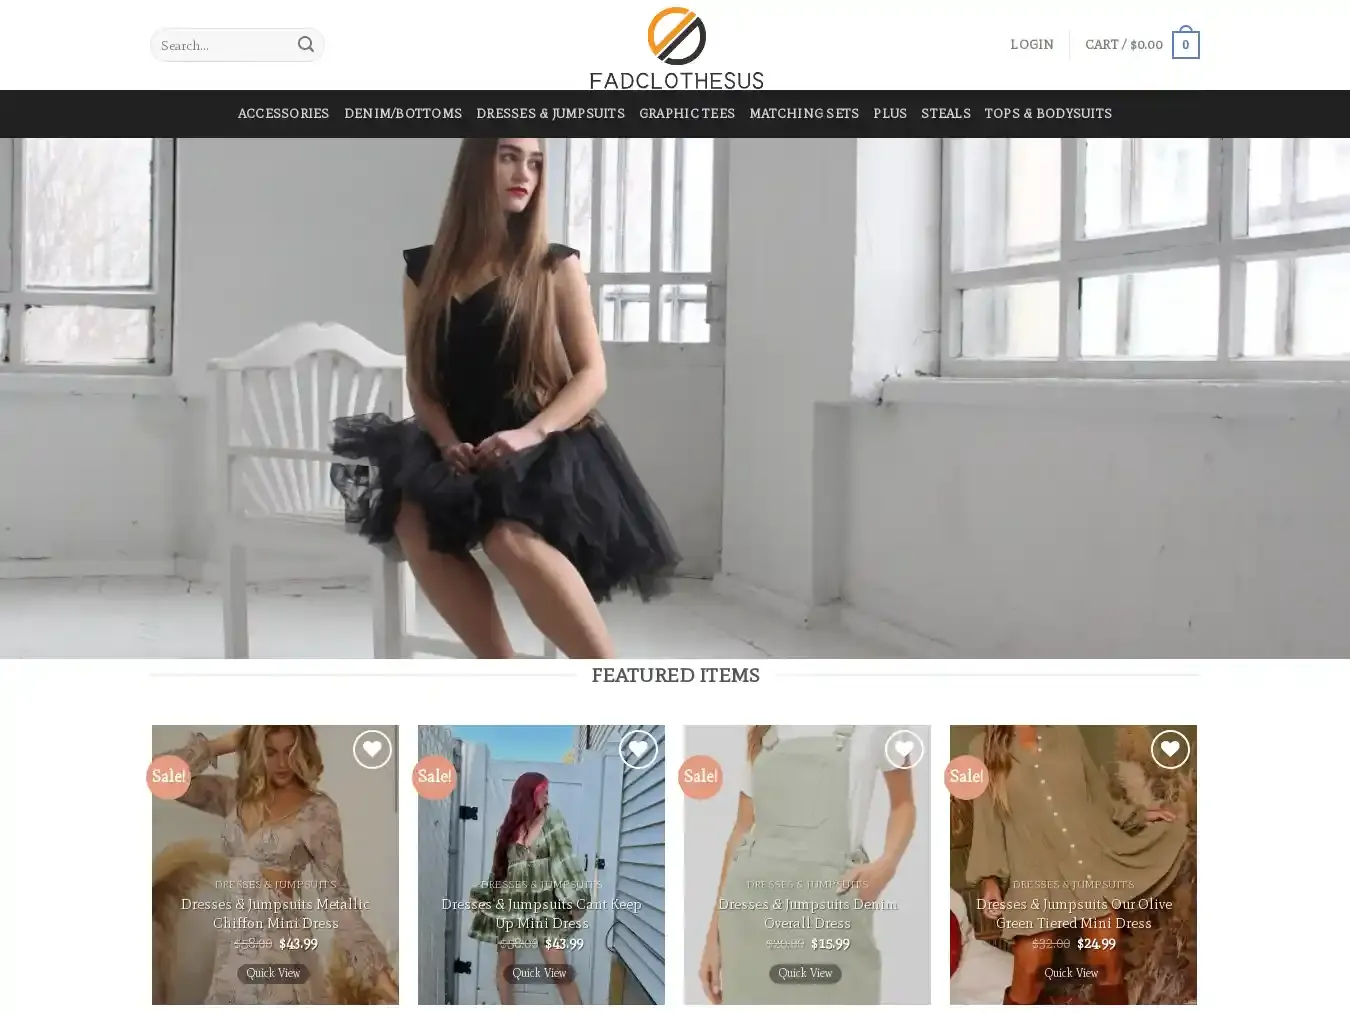 Fadclothesus.com Fraudulent Fashion website.